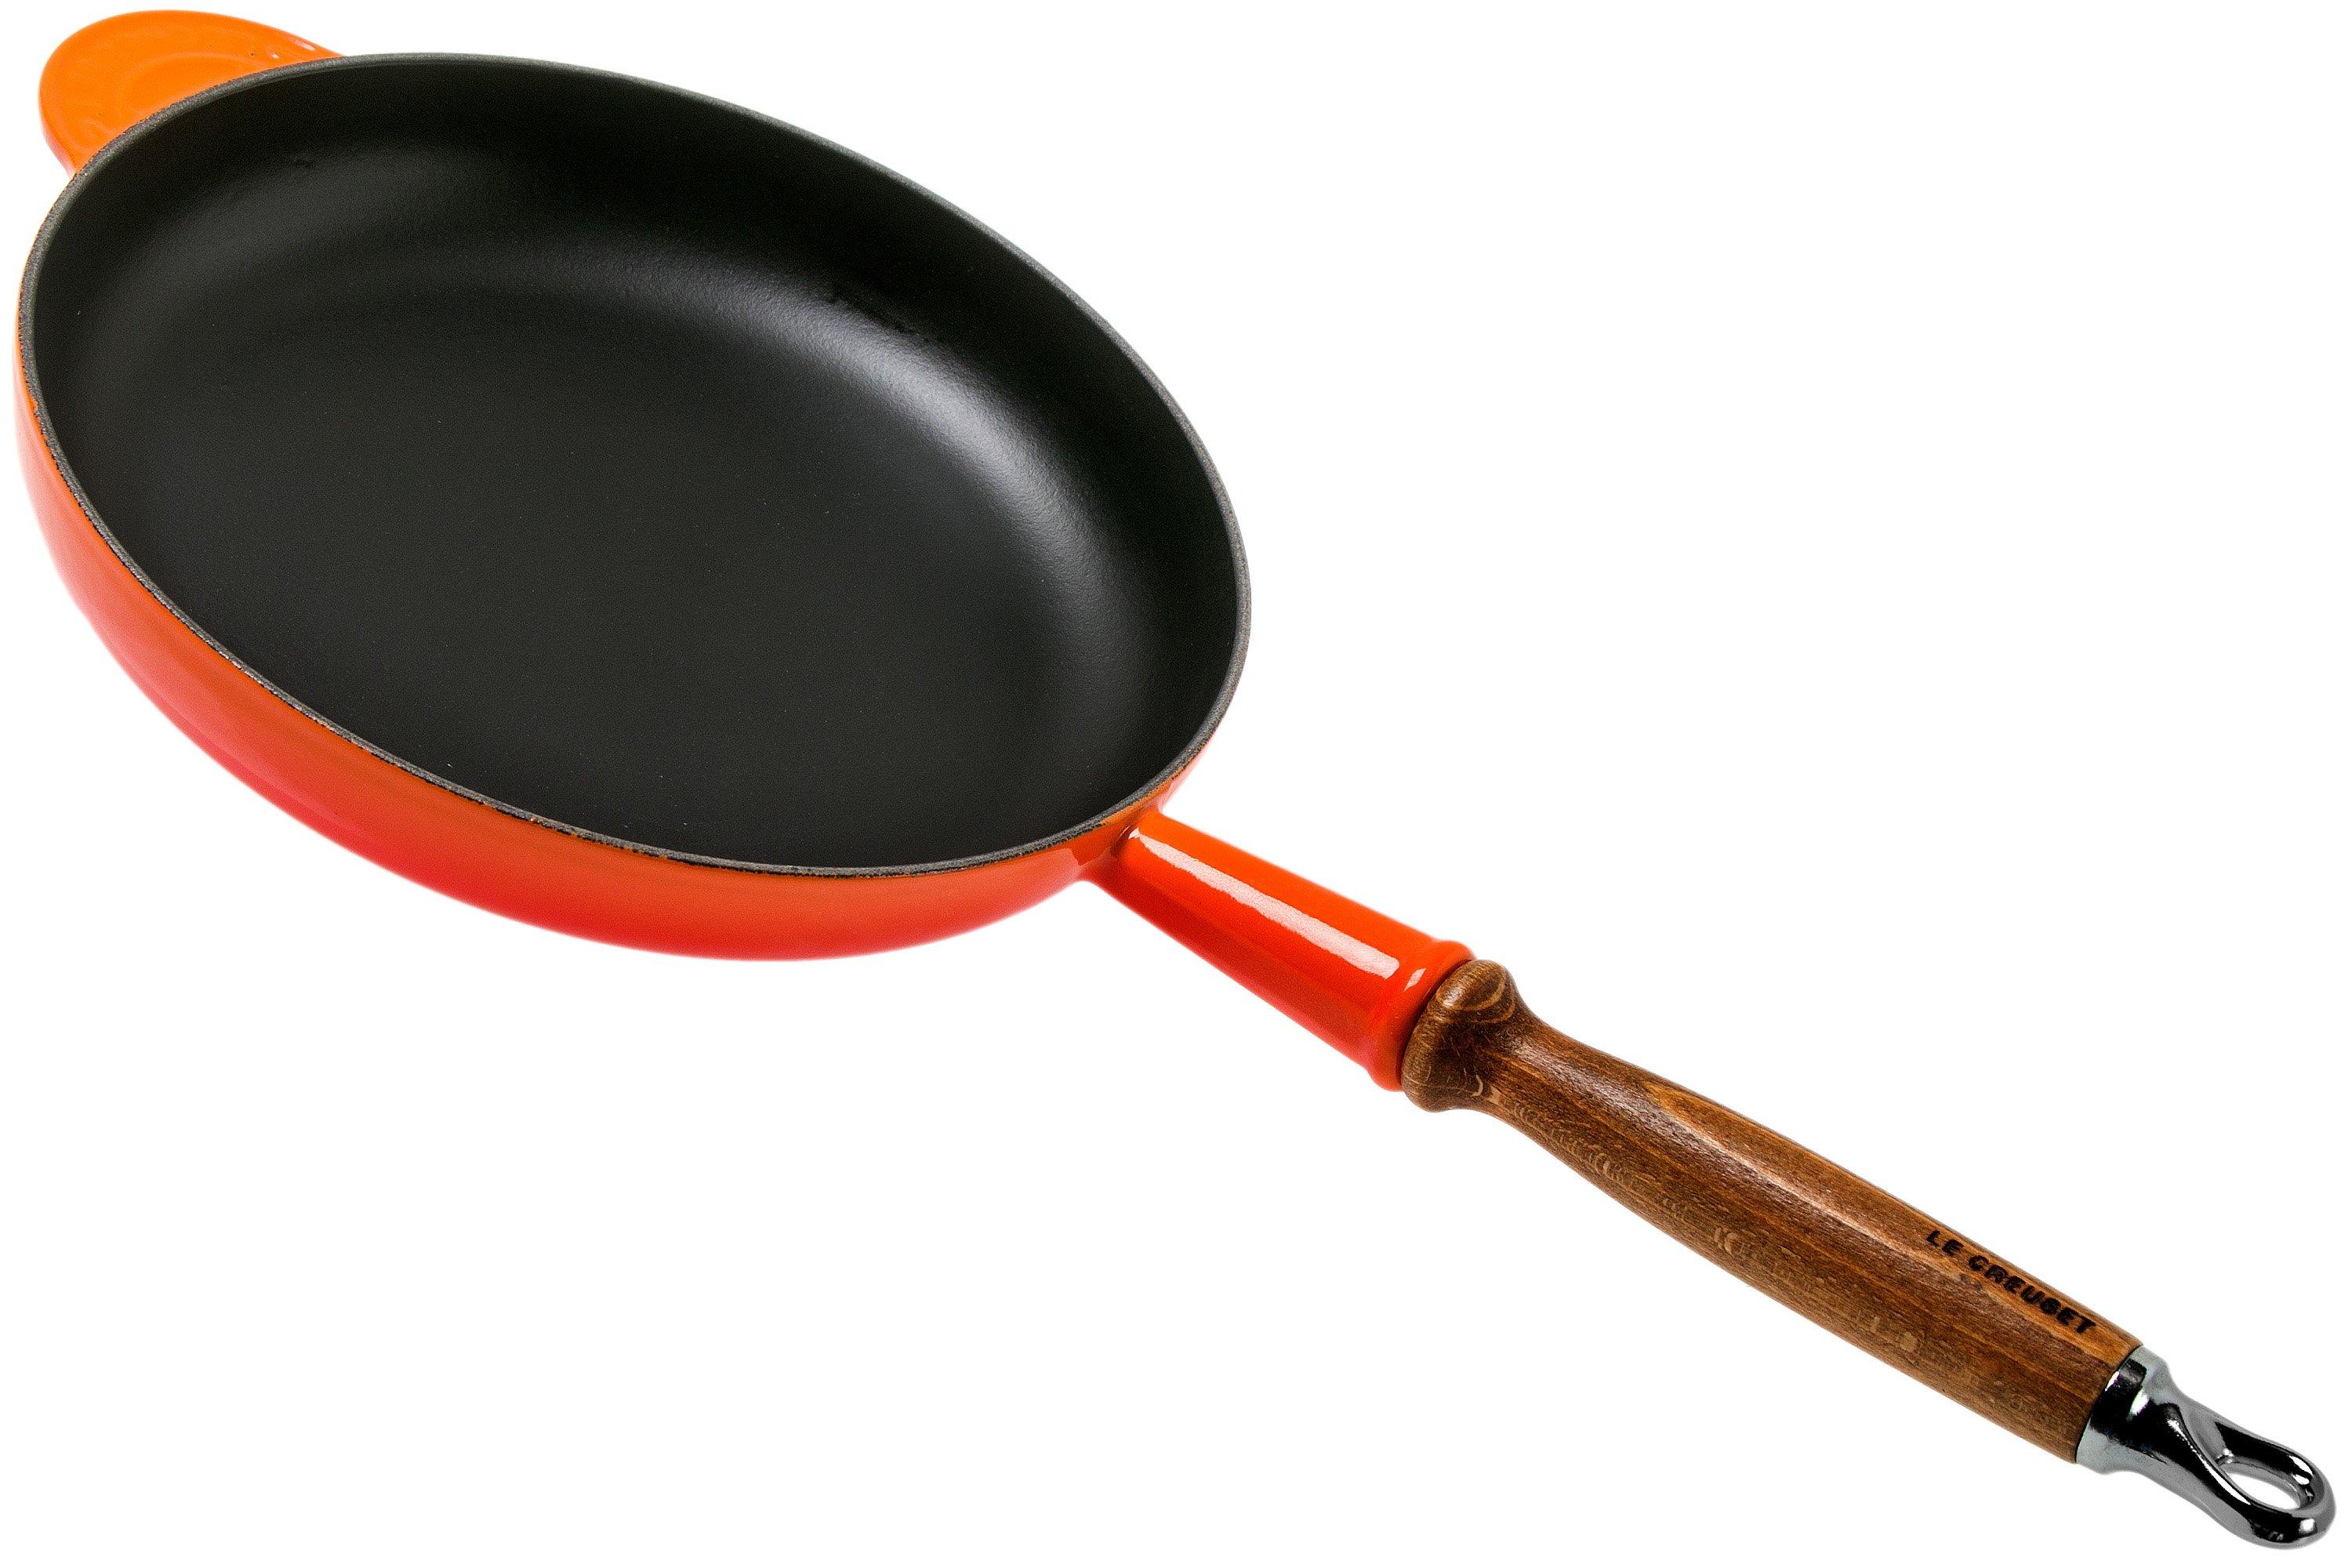 Leed omringen hoop Le Creuset frying pan - 24 cm, 1.6 L orange-red | Advantageously shopping  at Knivesandtools.com